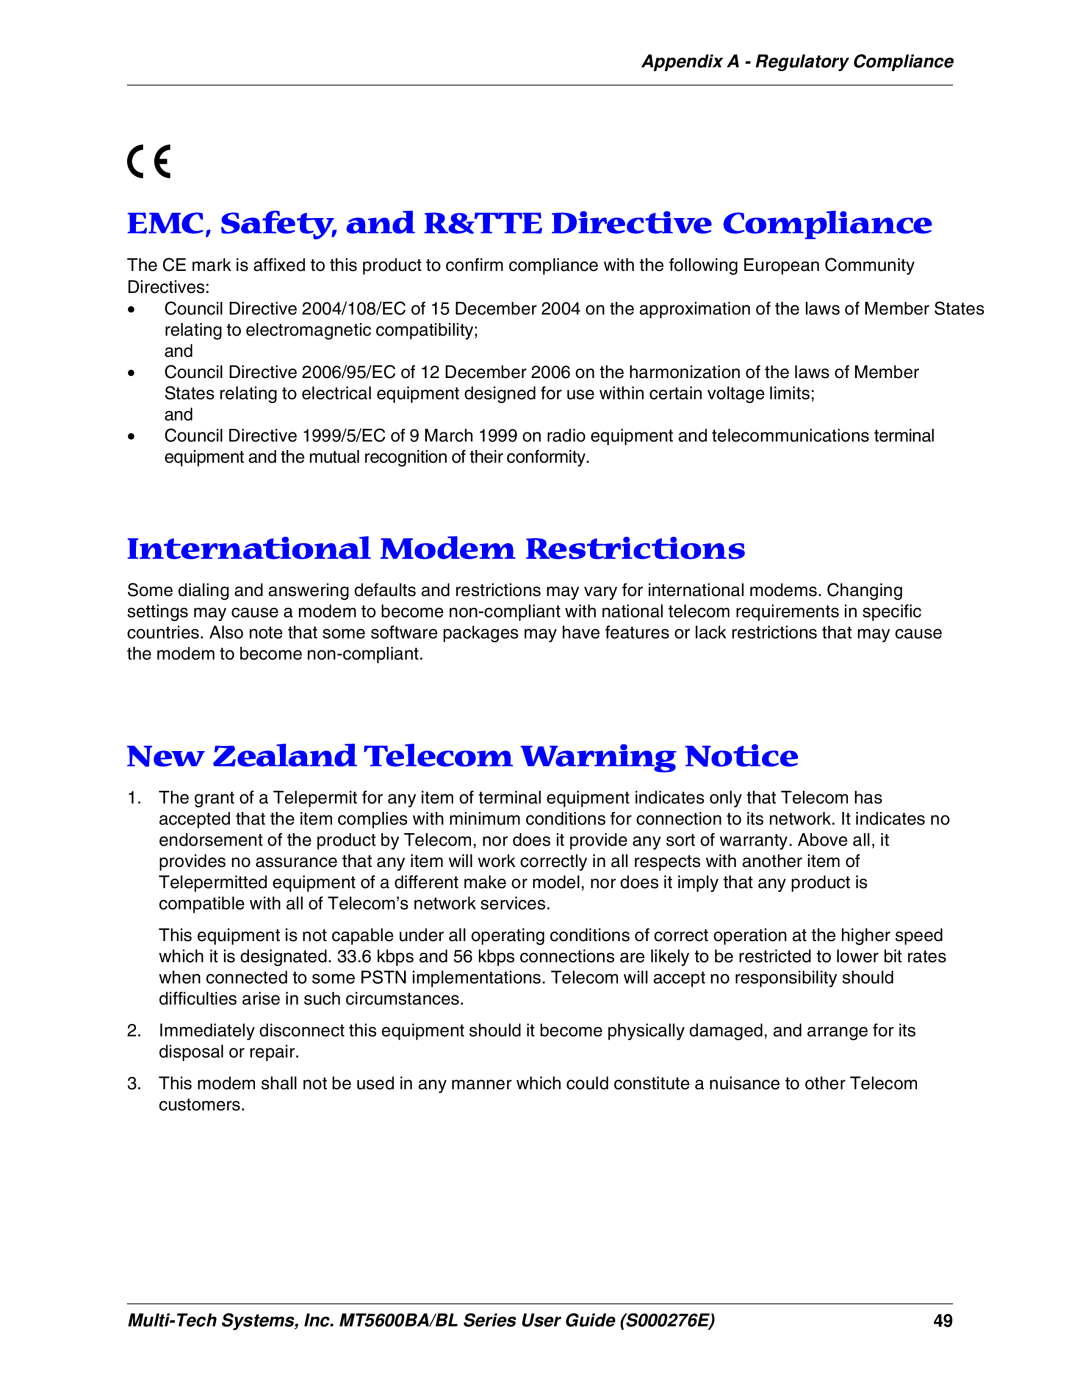 Multitech MT5600BA, MT5600BL manual EMC, Safety, and R&TTE Directive Compliance, International Modem Restrictions 